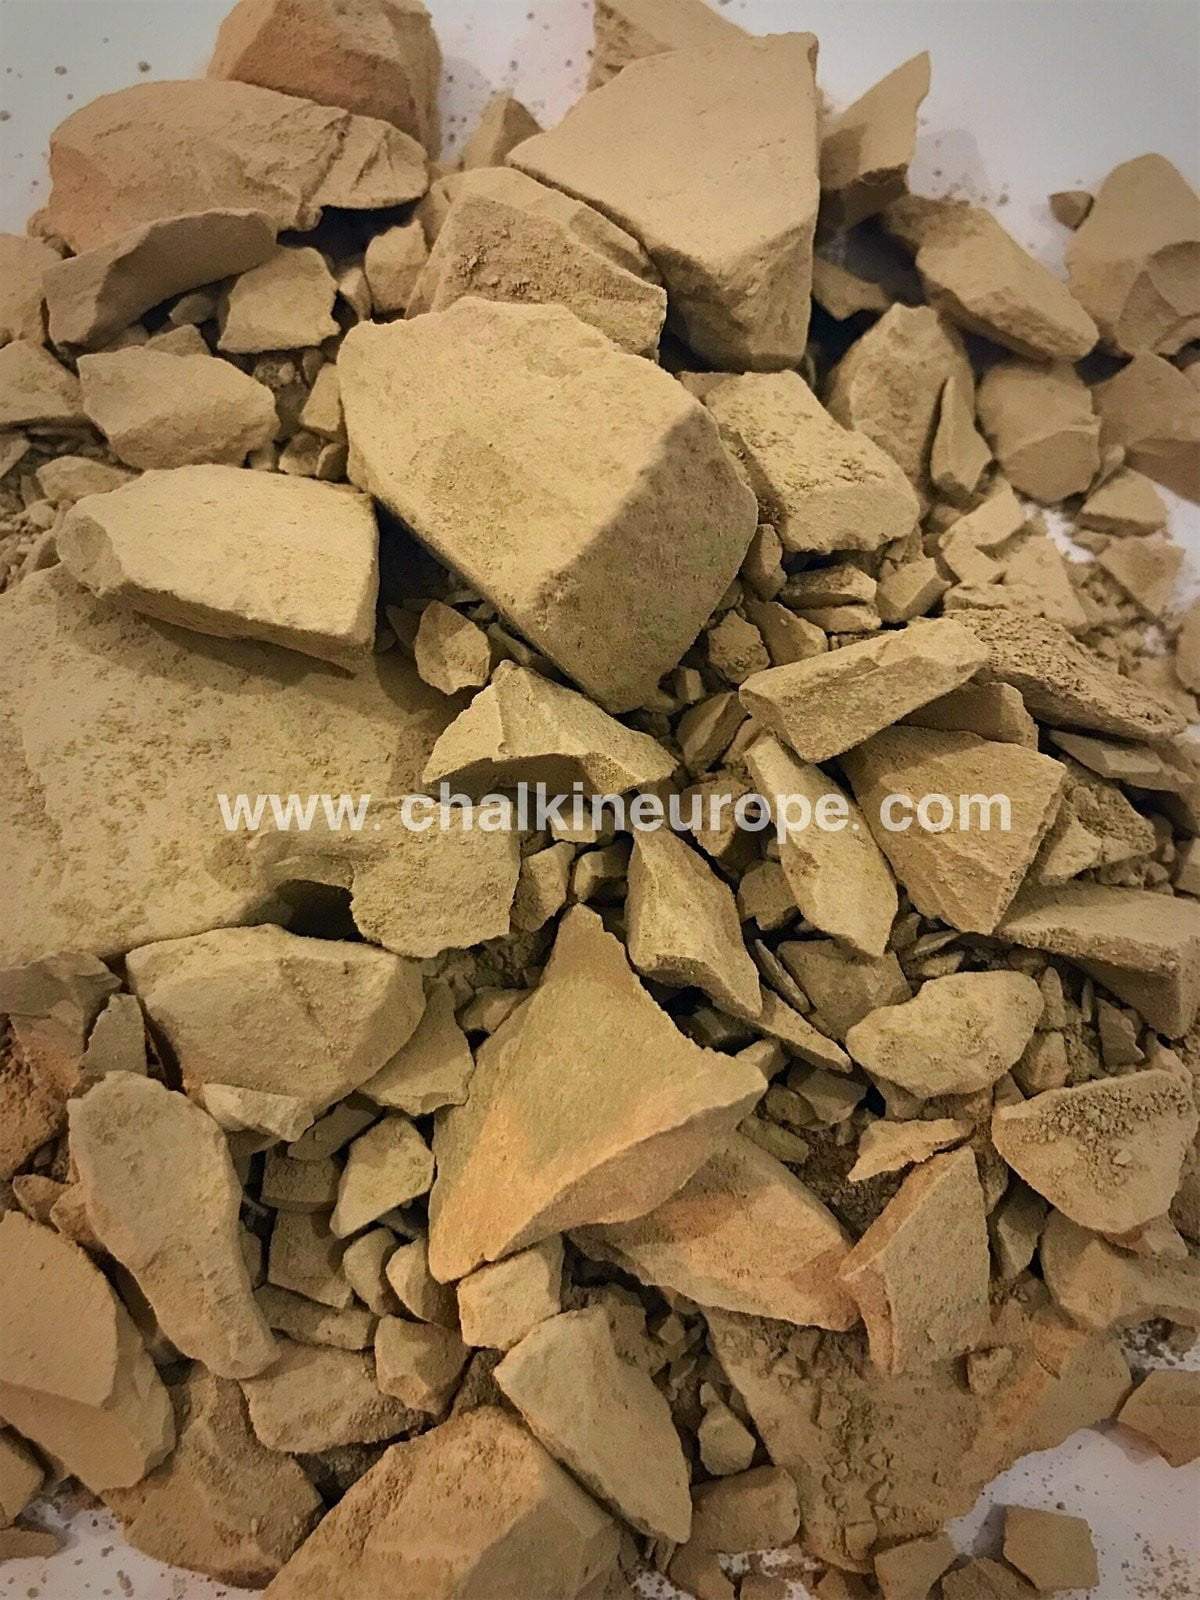 Turkestan Clay Bites - Chalkineurope